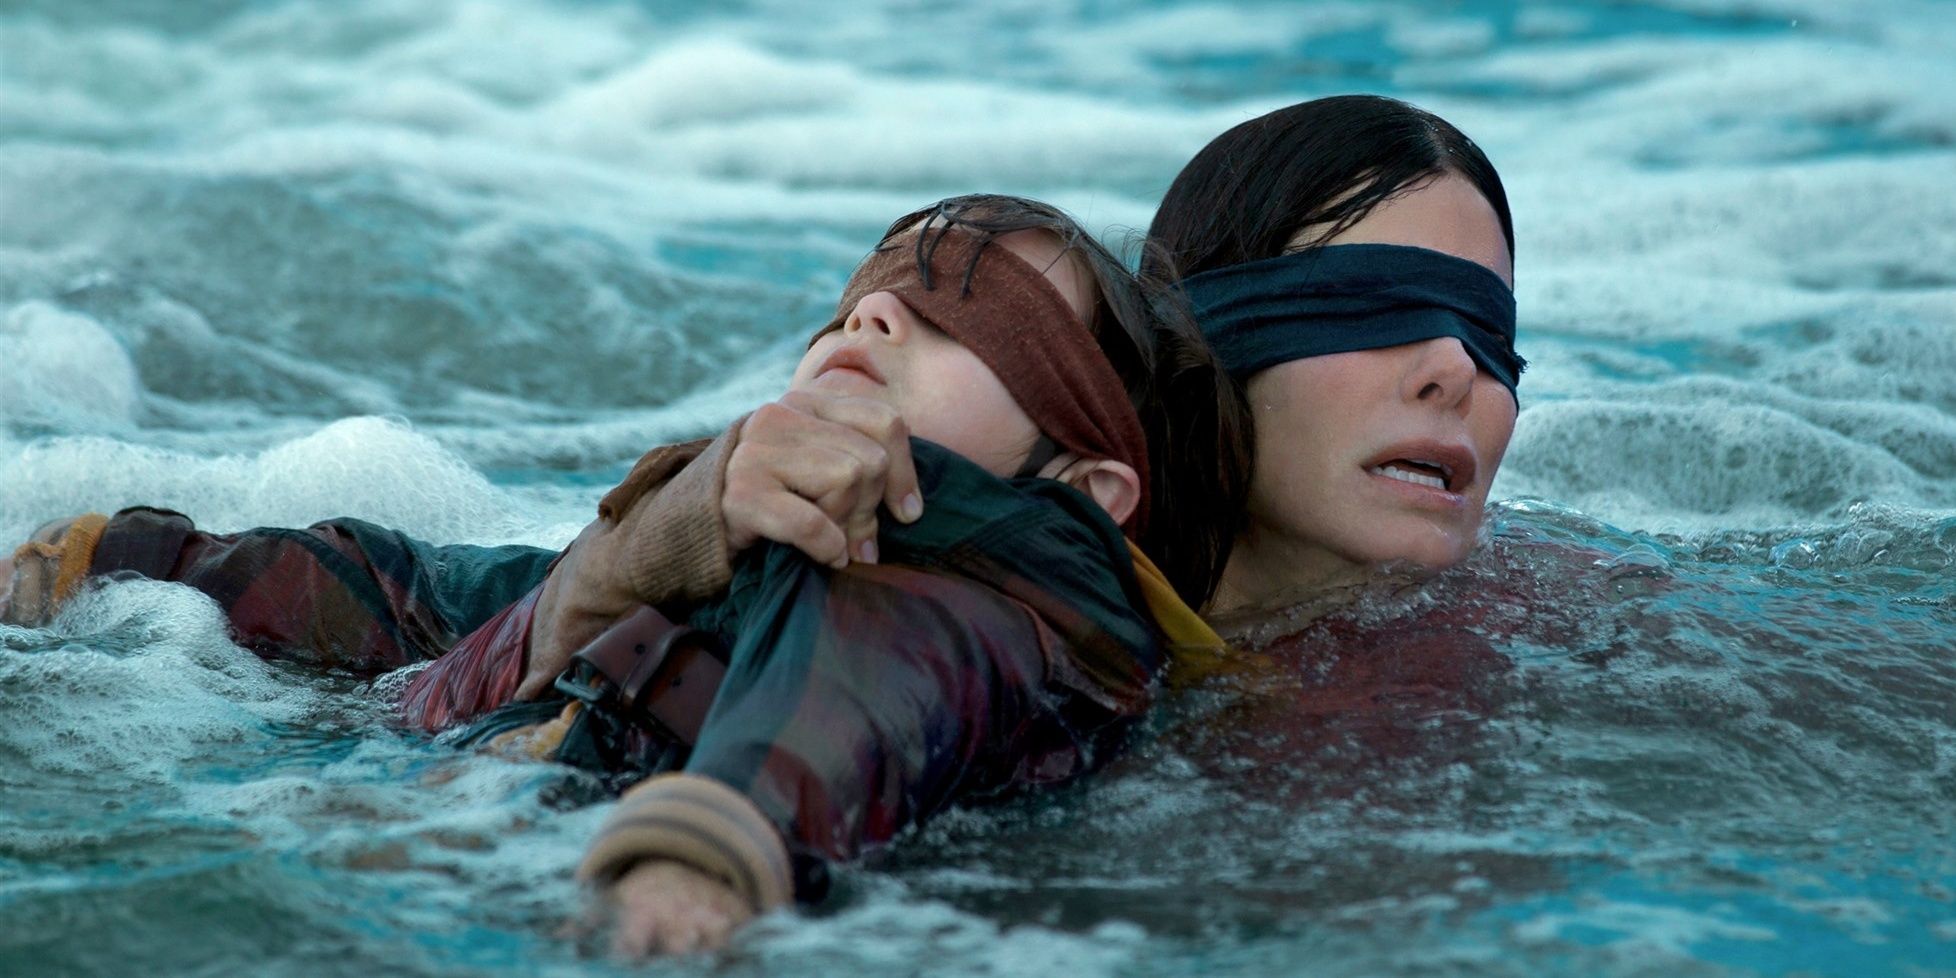 Sandra Bullock swimming blindfolded holding a child in Bird Box.